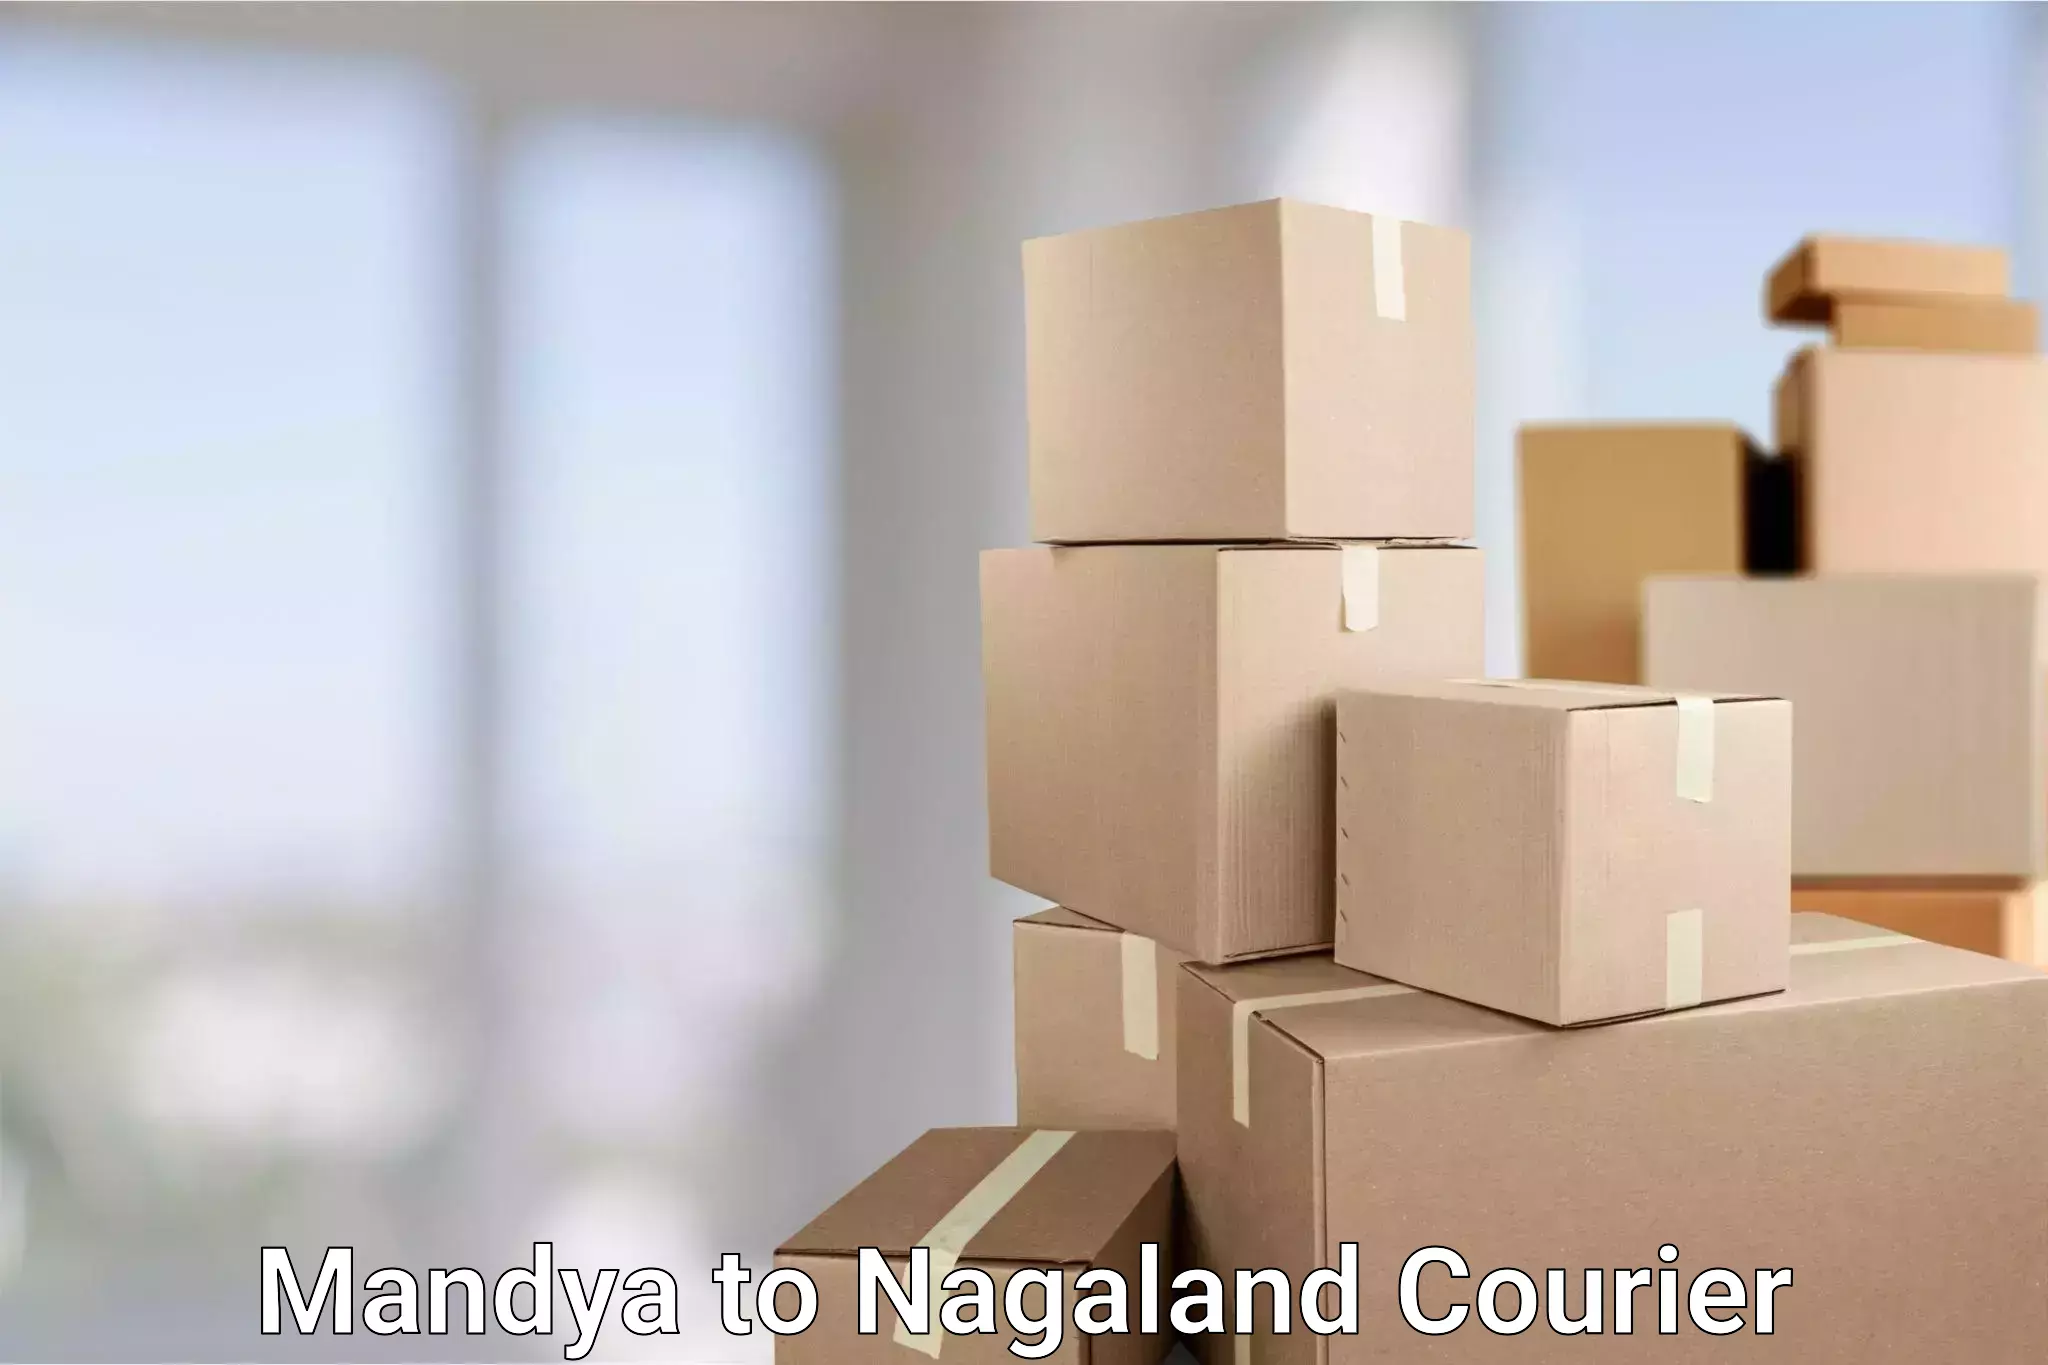 Digital courier platforms Mandya to Nagaland